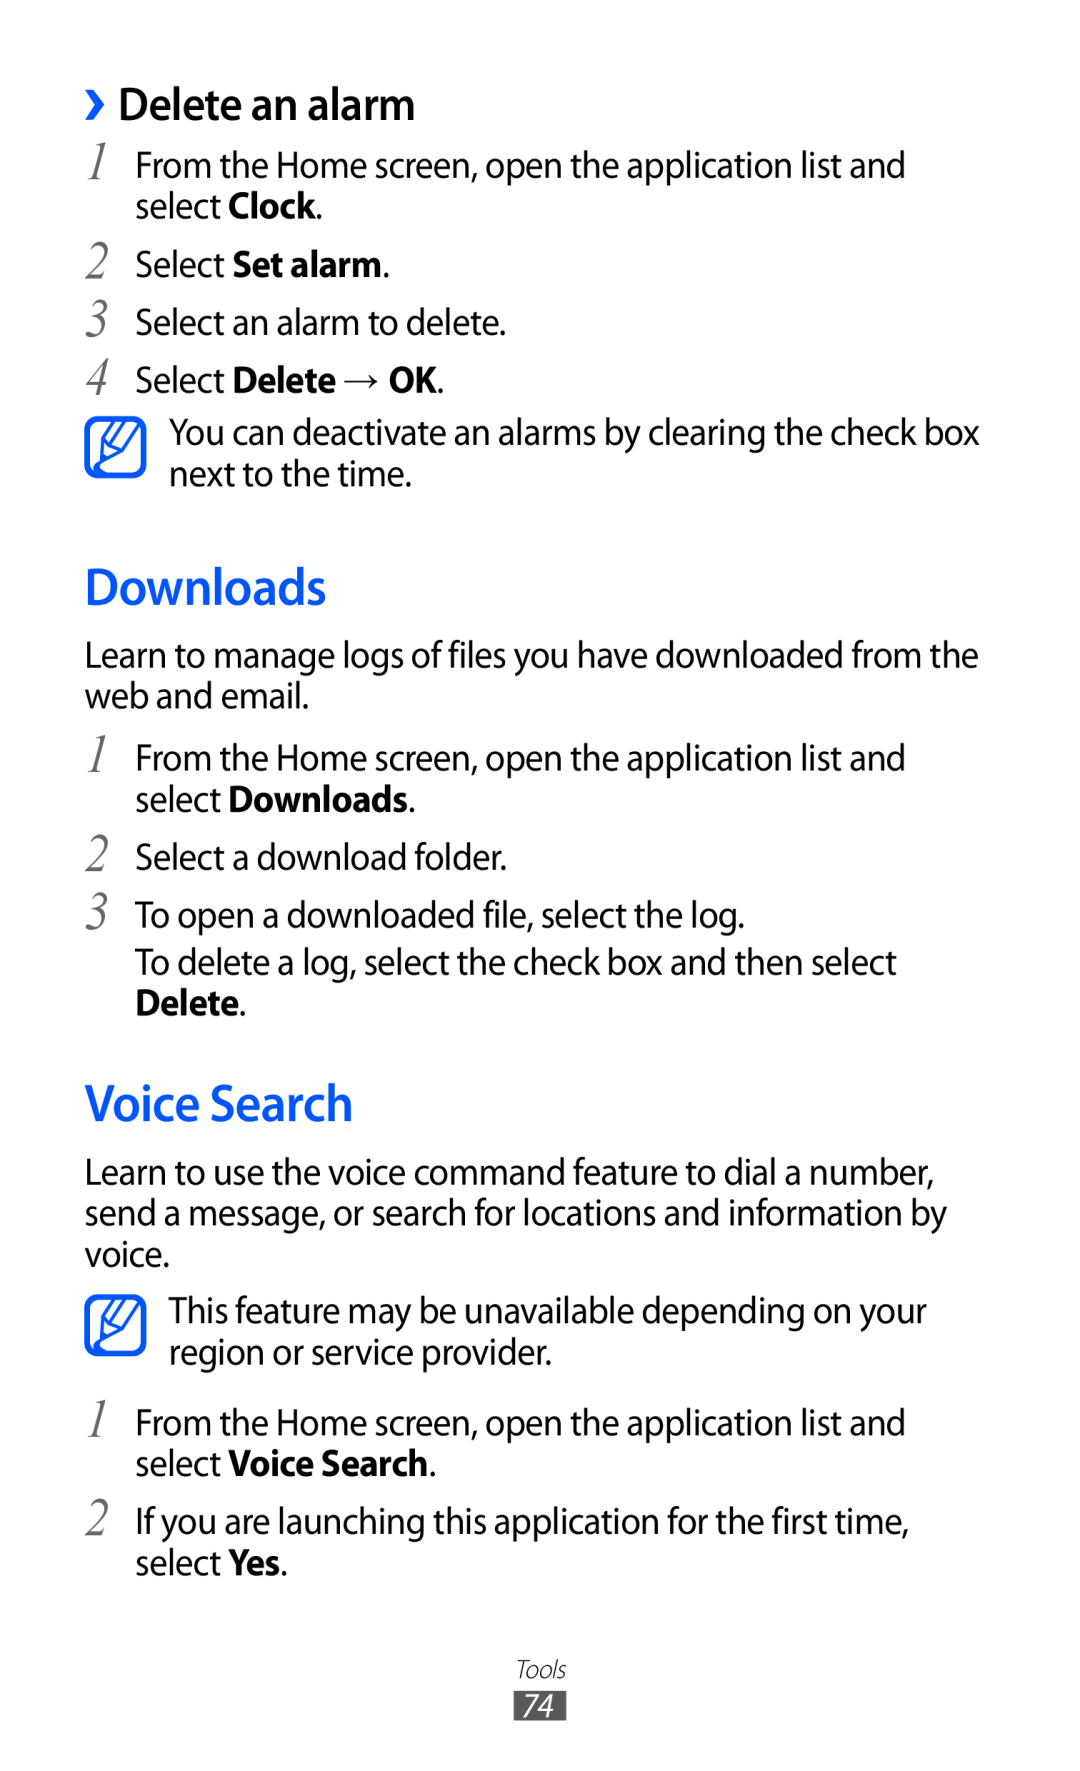 Samsung GT-P7510 user manual Downloads, Voice Search, ››Delete an alarm, Select Set alarm, Select Delete → OK 